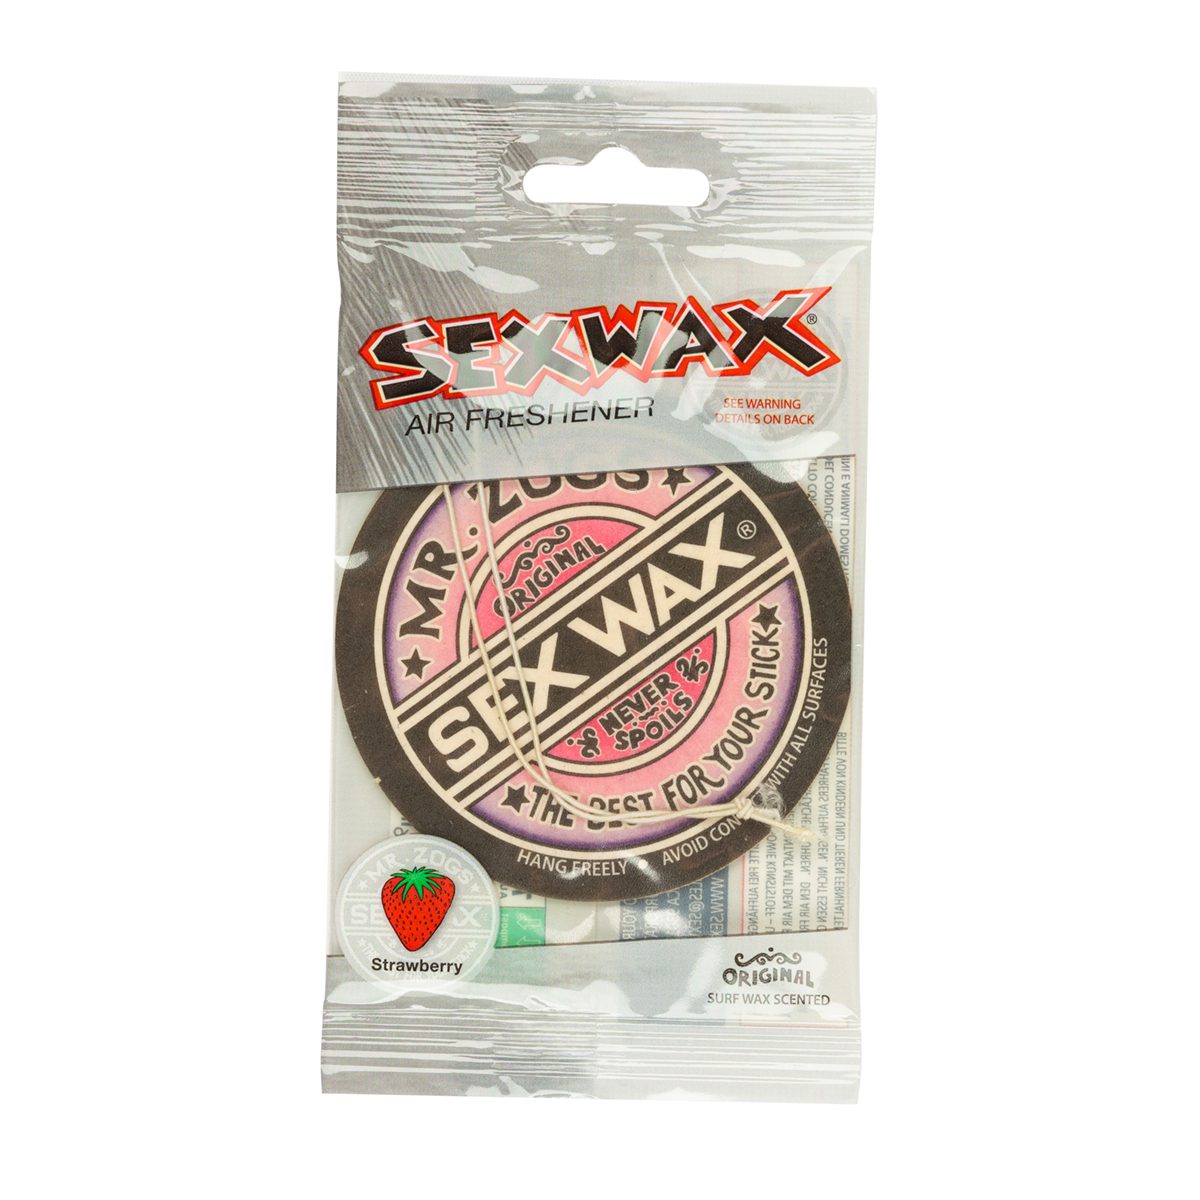 Sexwax Mr Zog’s Airfreshner (Pack 3)